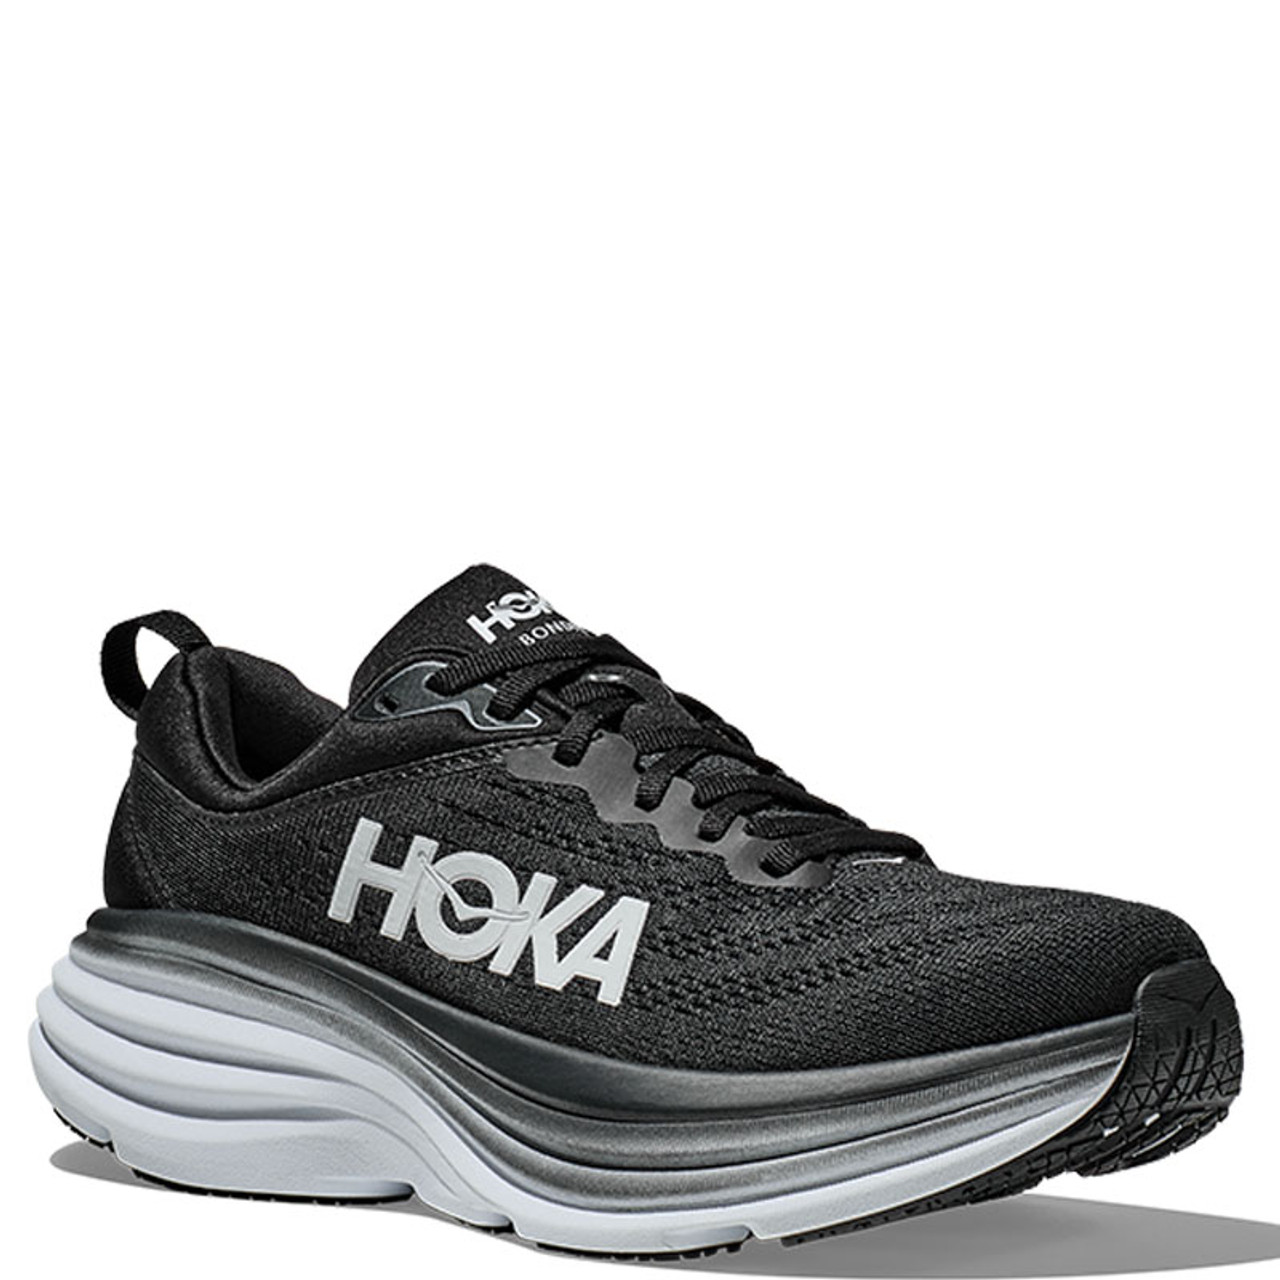 Hoka 1127952 BONDI 8 Road Running Shoes Black White